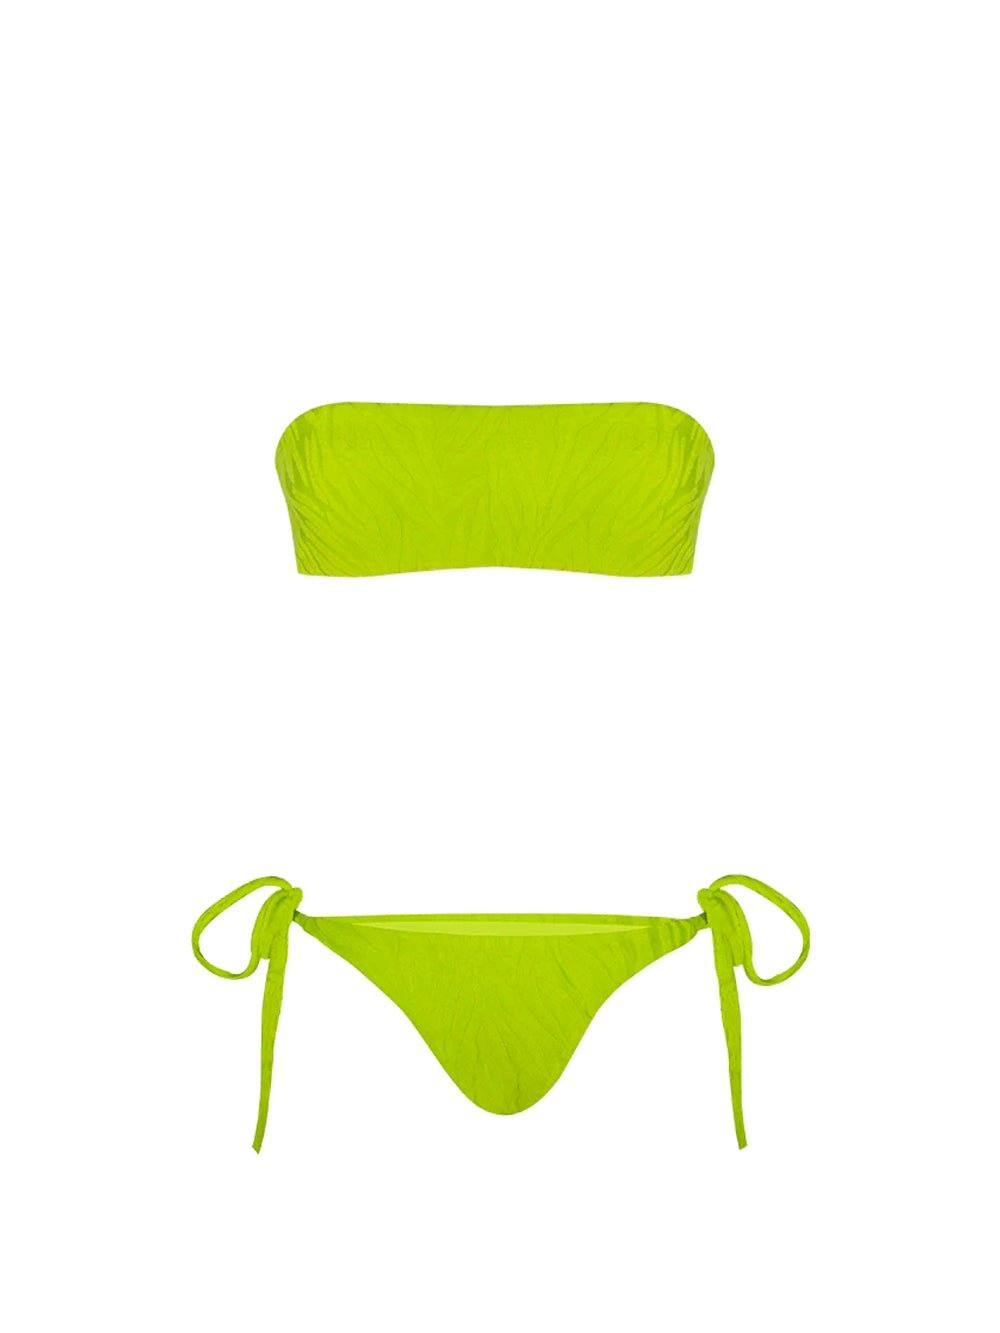 Strapless Bikini - Lime - OCEAN MYSTERY